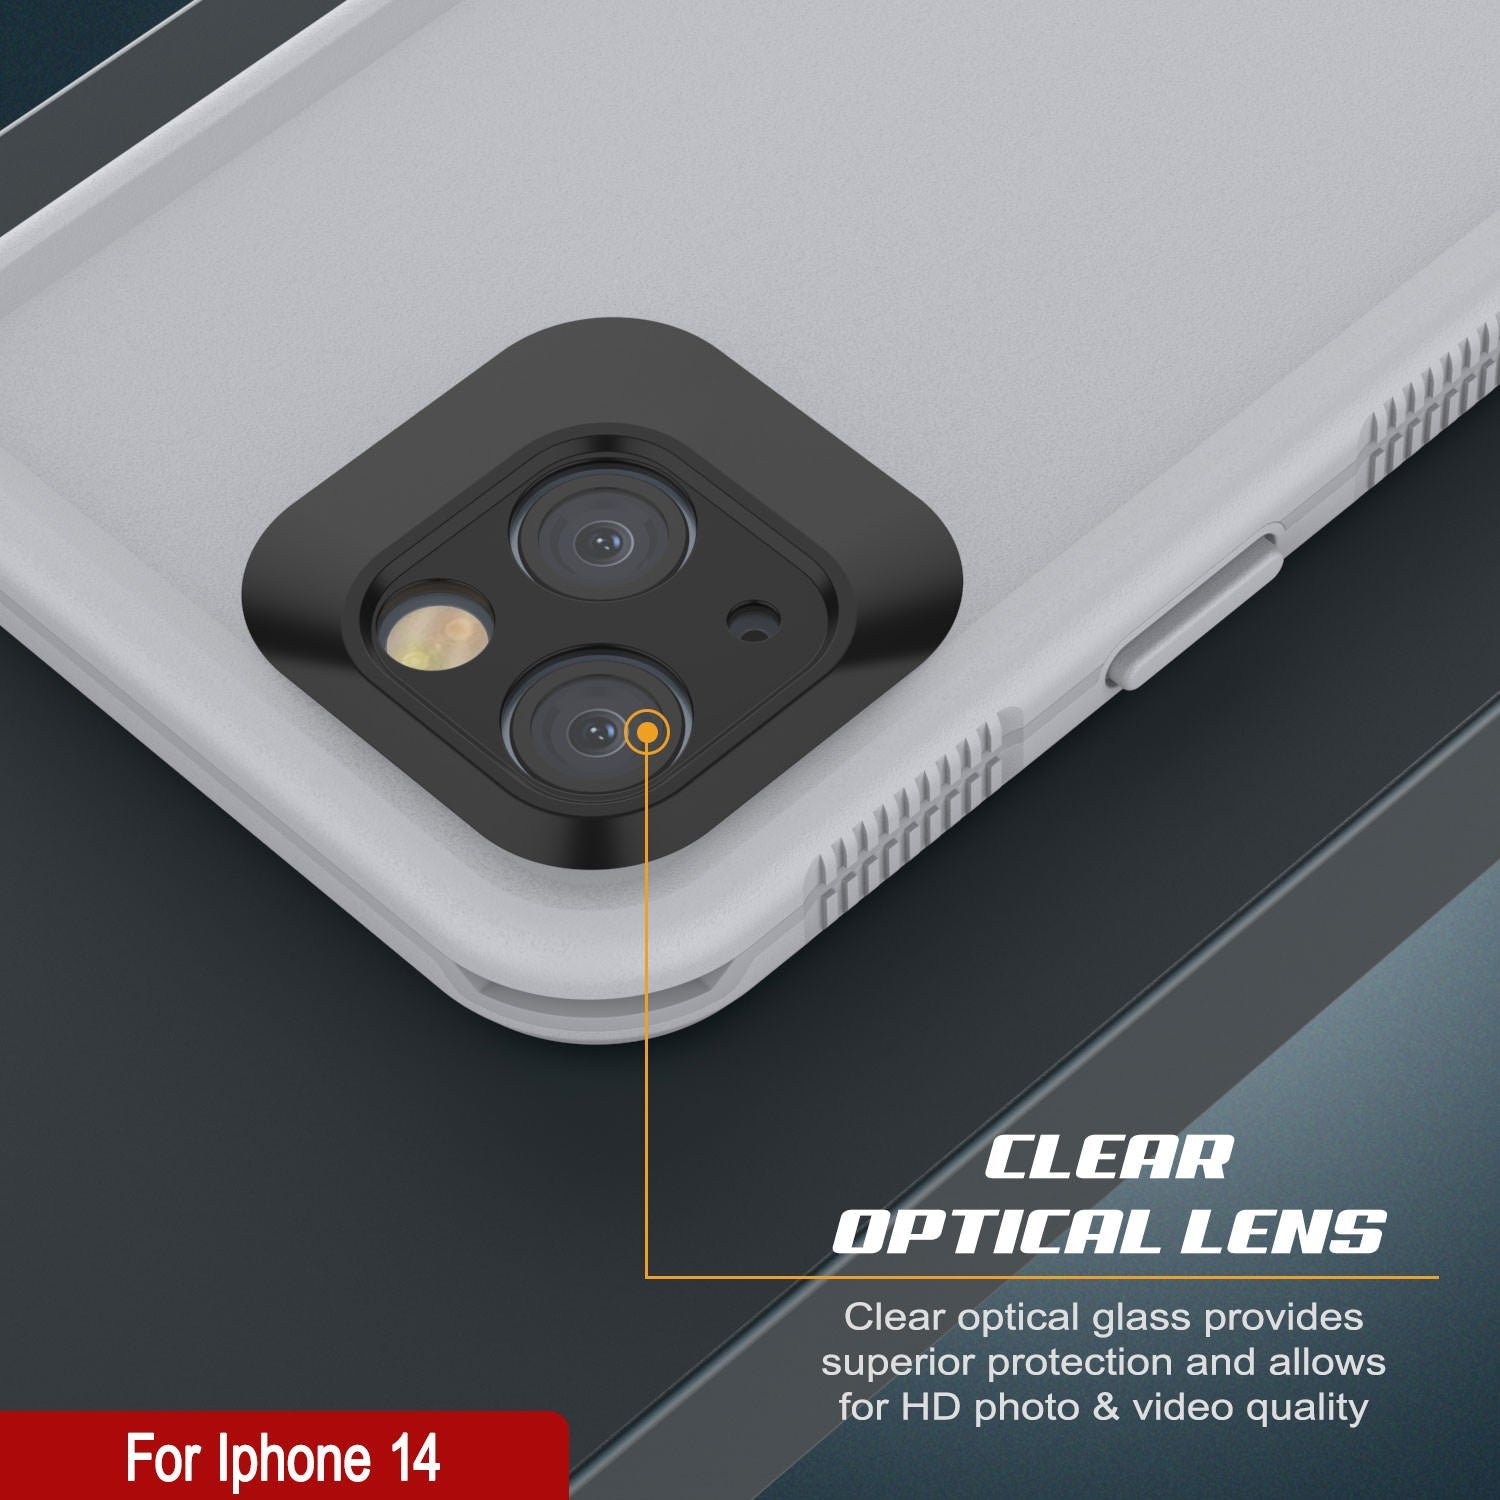 Punkcase iPhone 14 Waterproof Case [Aqua Series] Armor Cover [White]